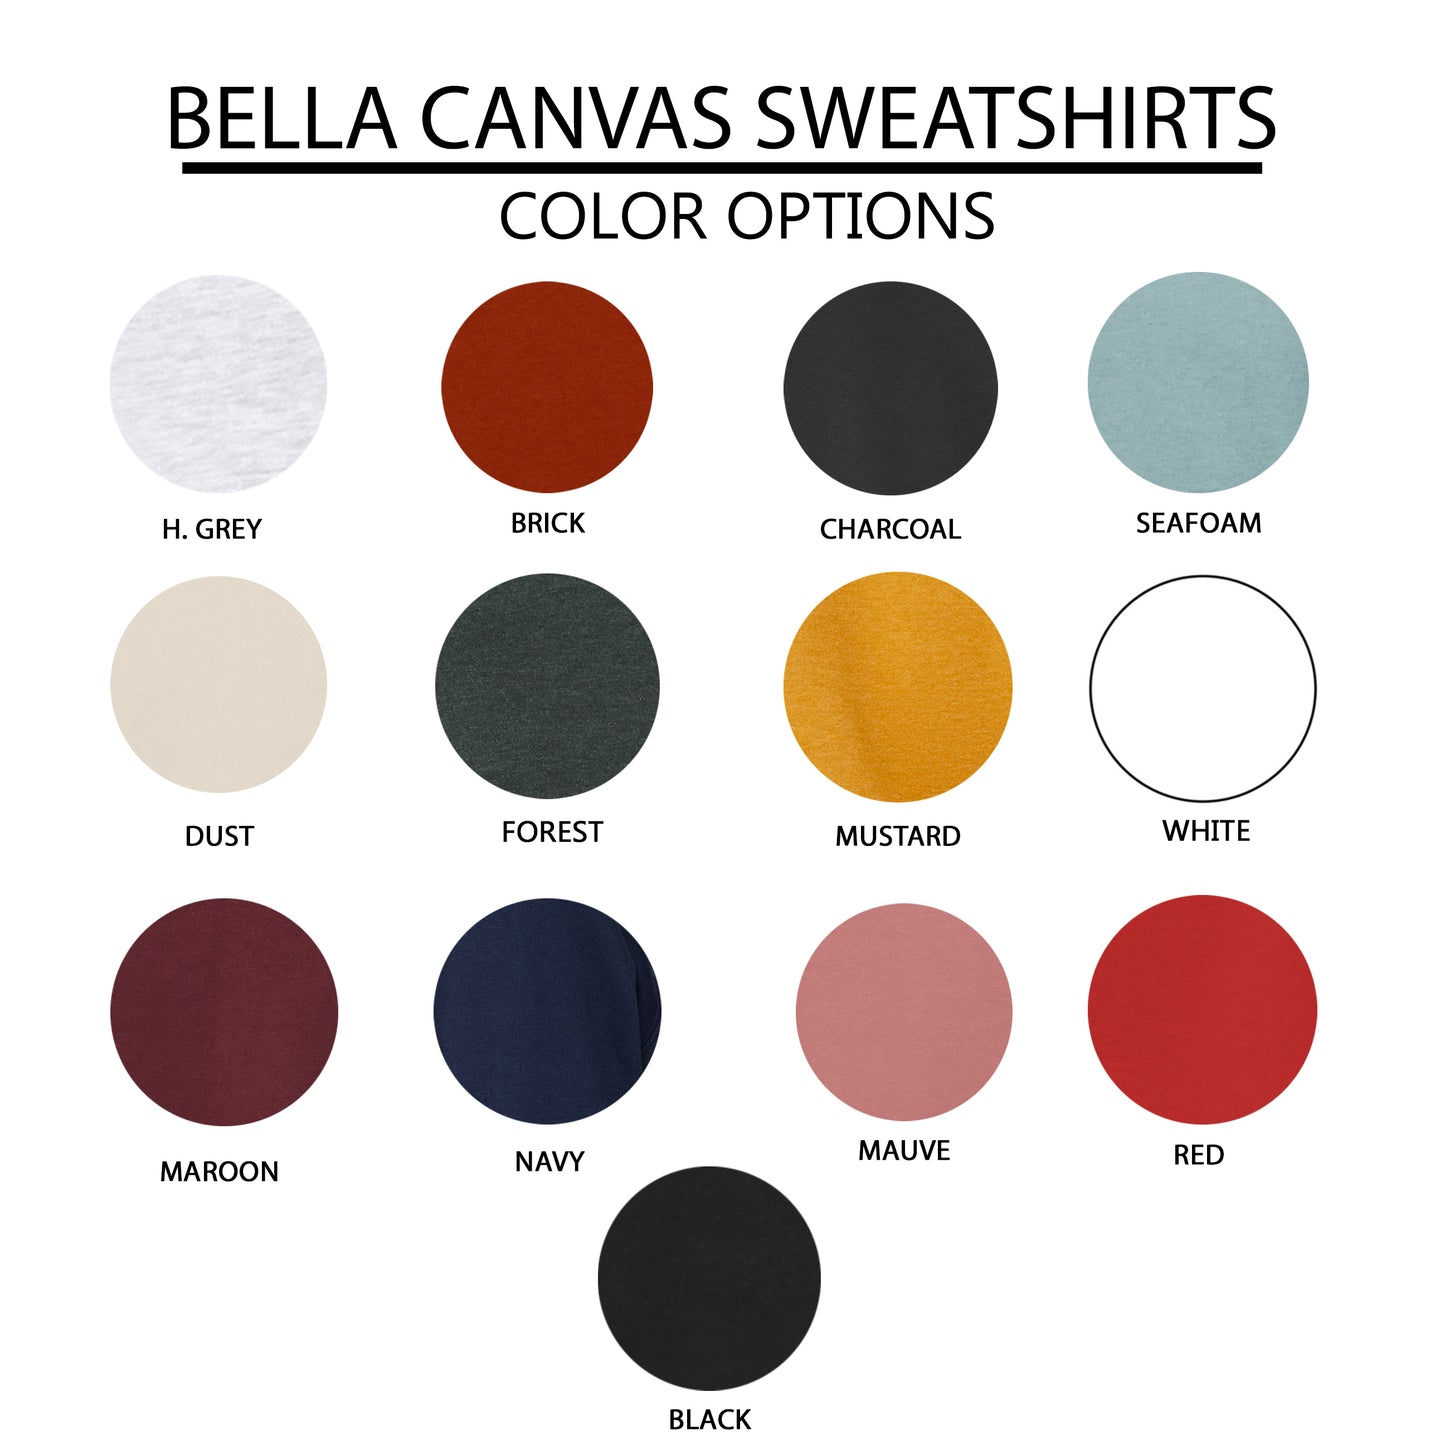 Kind Vibes Only | Bella Canvas Premium Sweatshirt